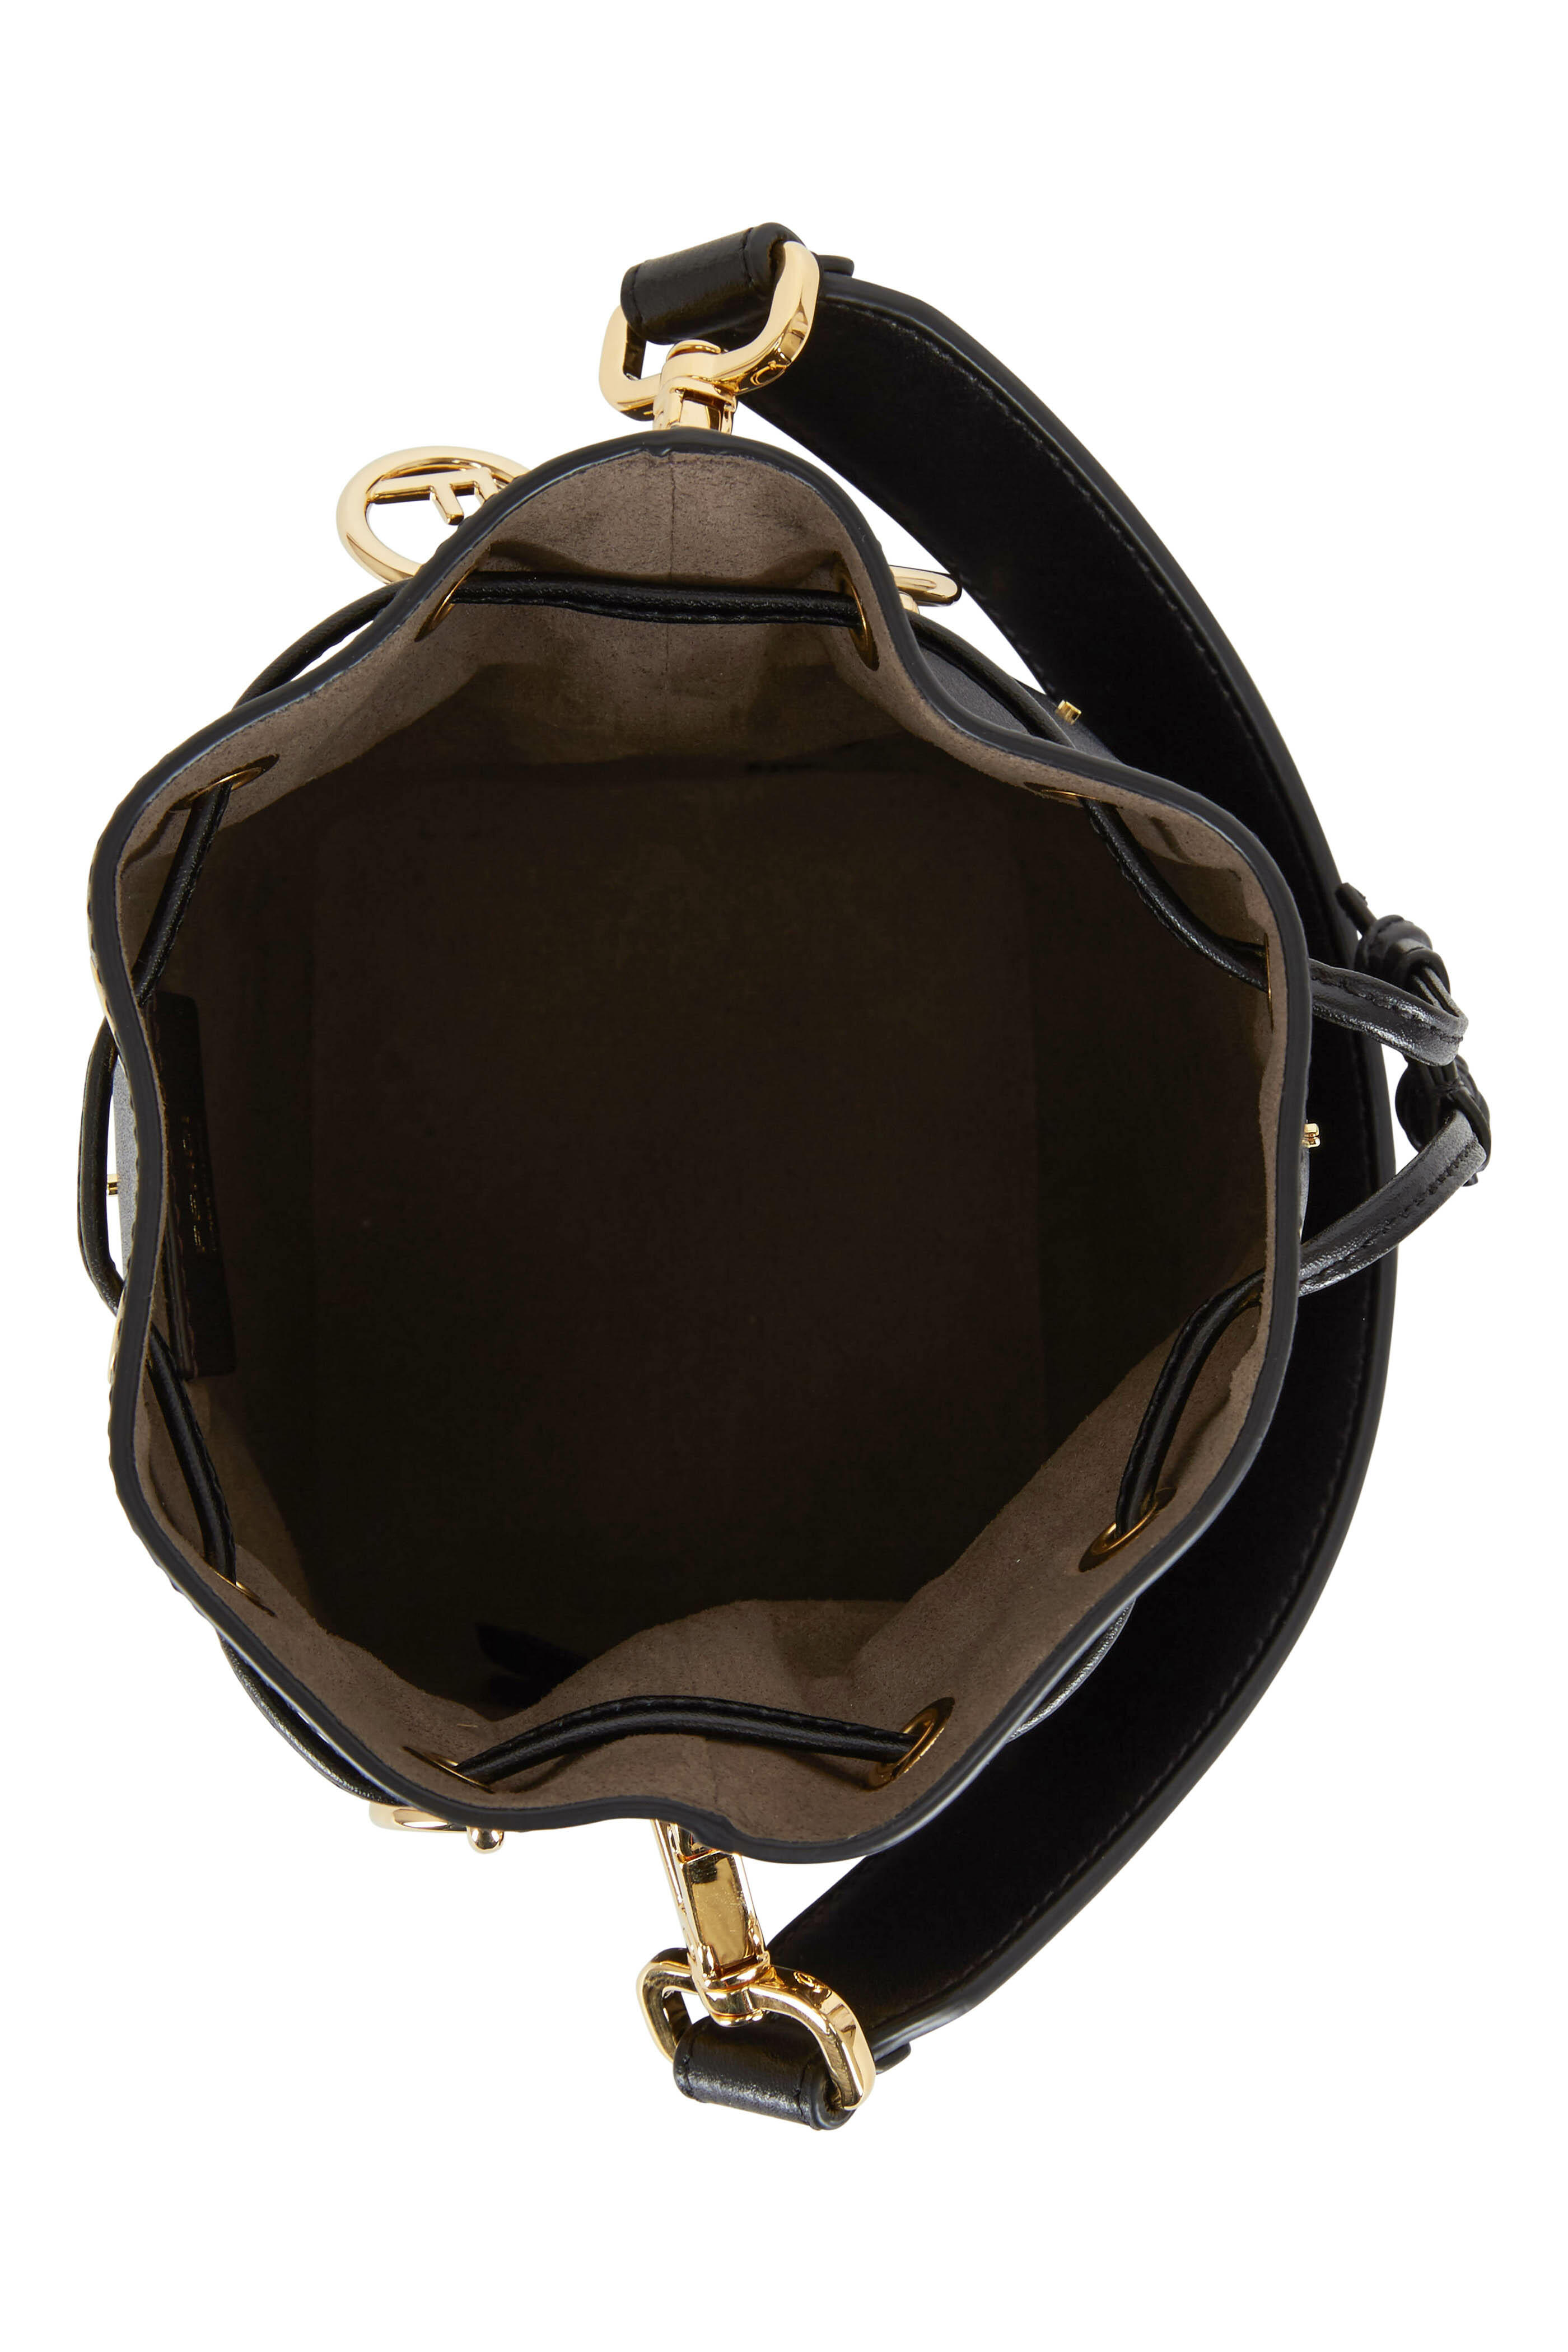 Fendi Black Leather Studded Bow Mon Tresor Bucket Bag